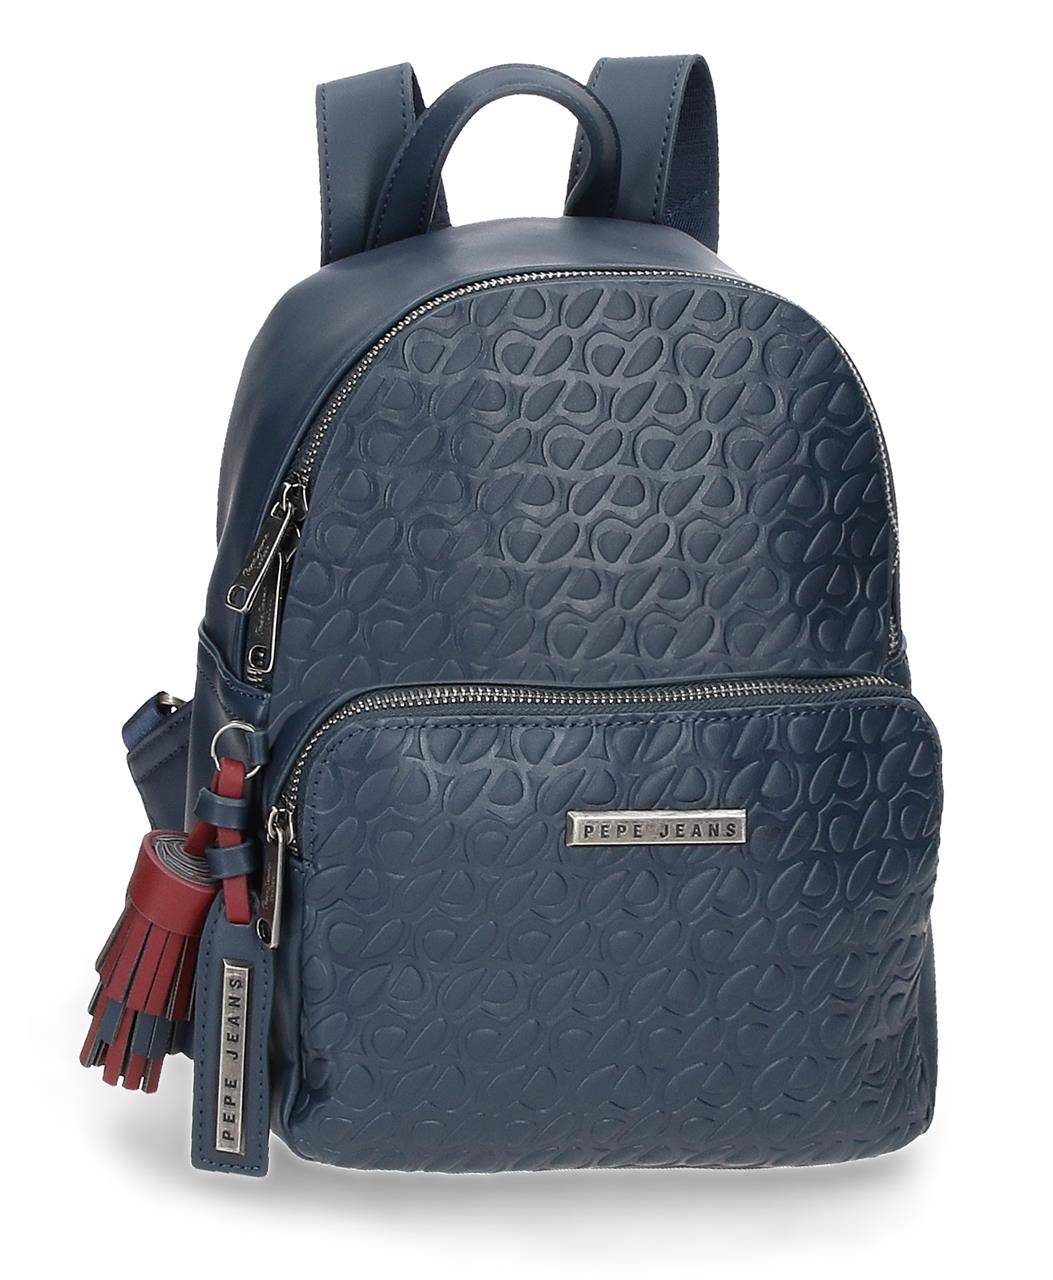 Pepe Jeans Bags & Handbags for Women for sale | eBay